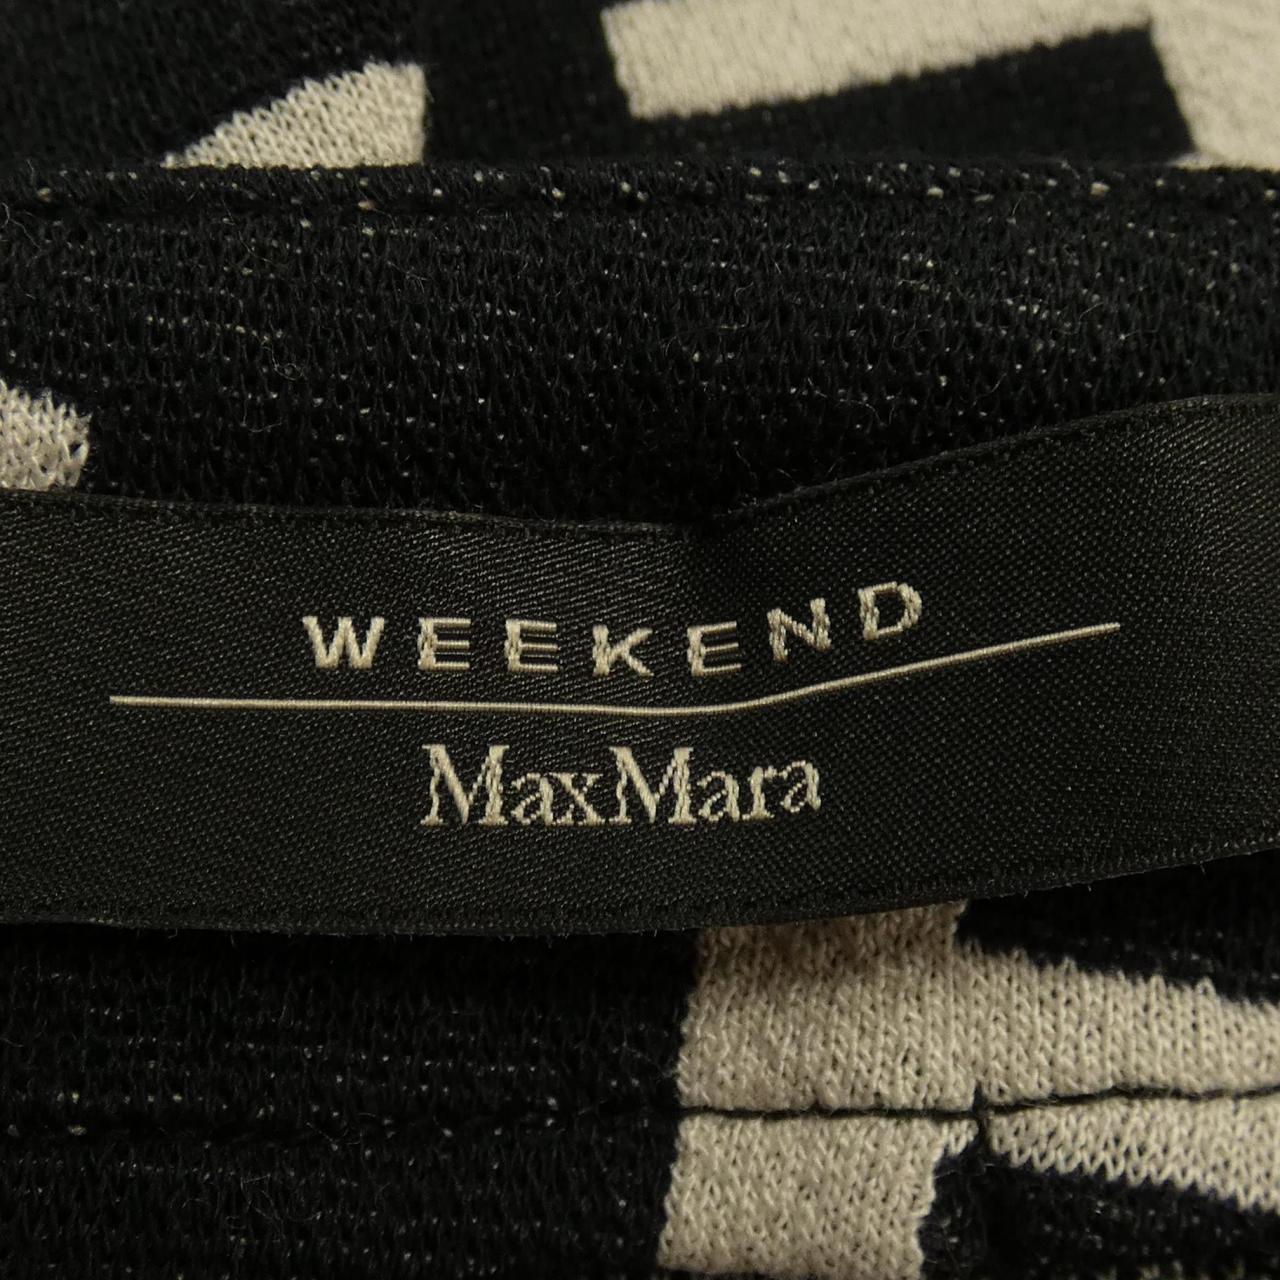 Max Mara weekend马克斯·玛拉周末半身裙